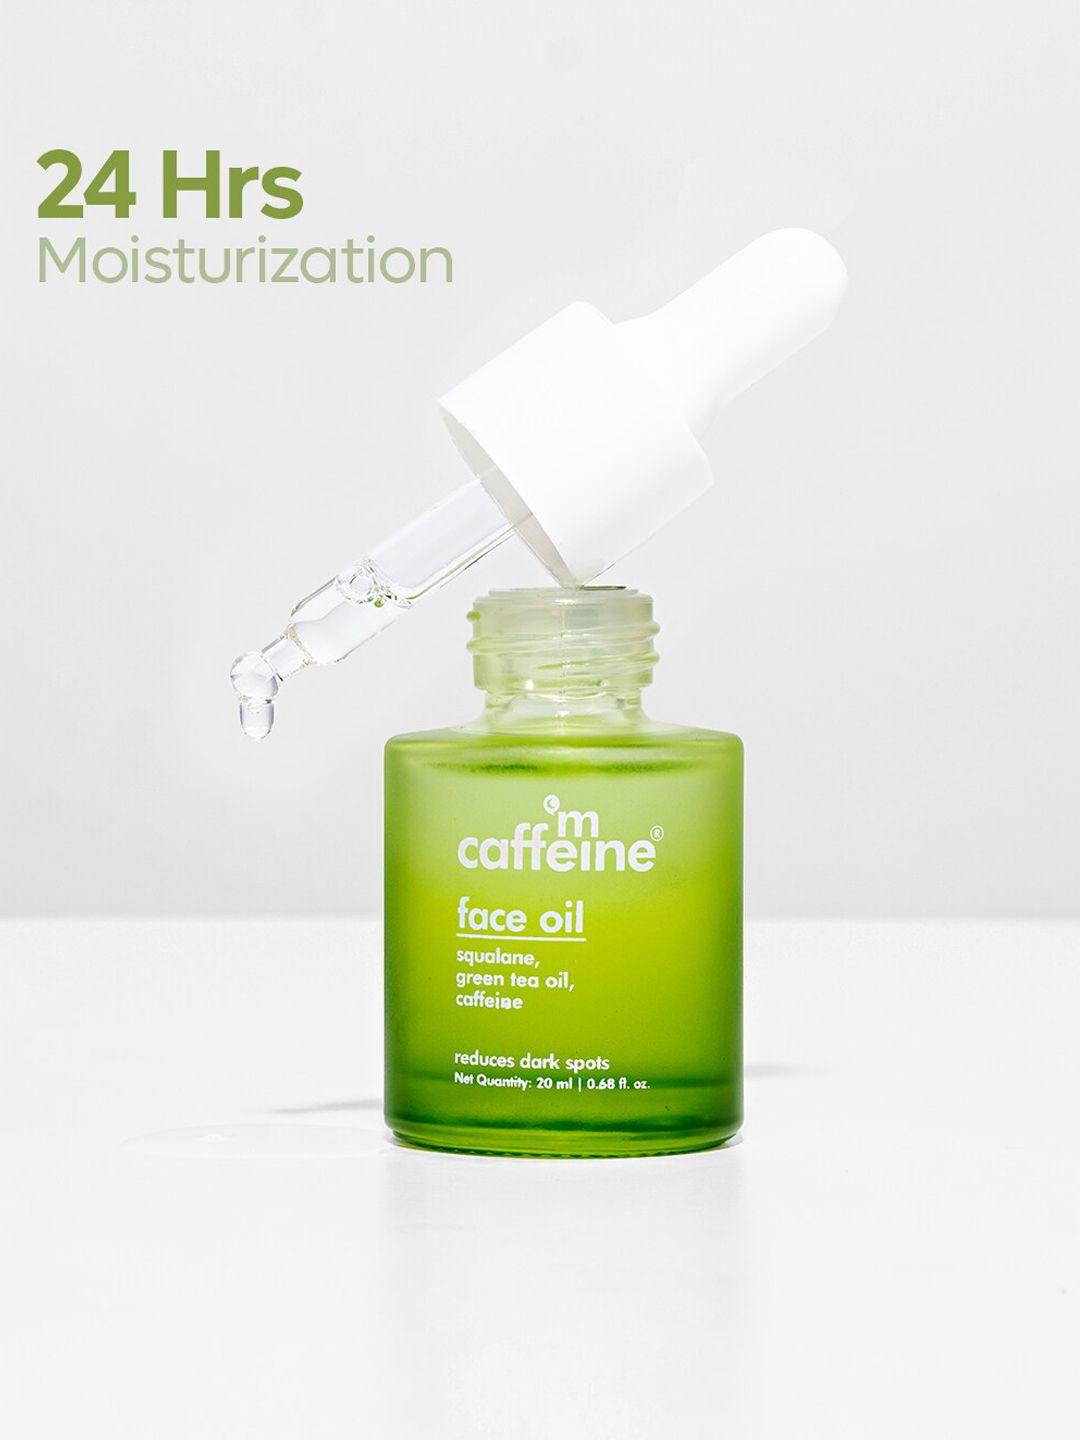 mcaffeine face oil with squalane & green tea oil to reduce dark spots - 20ml